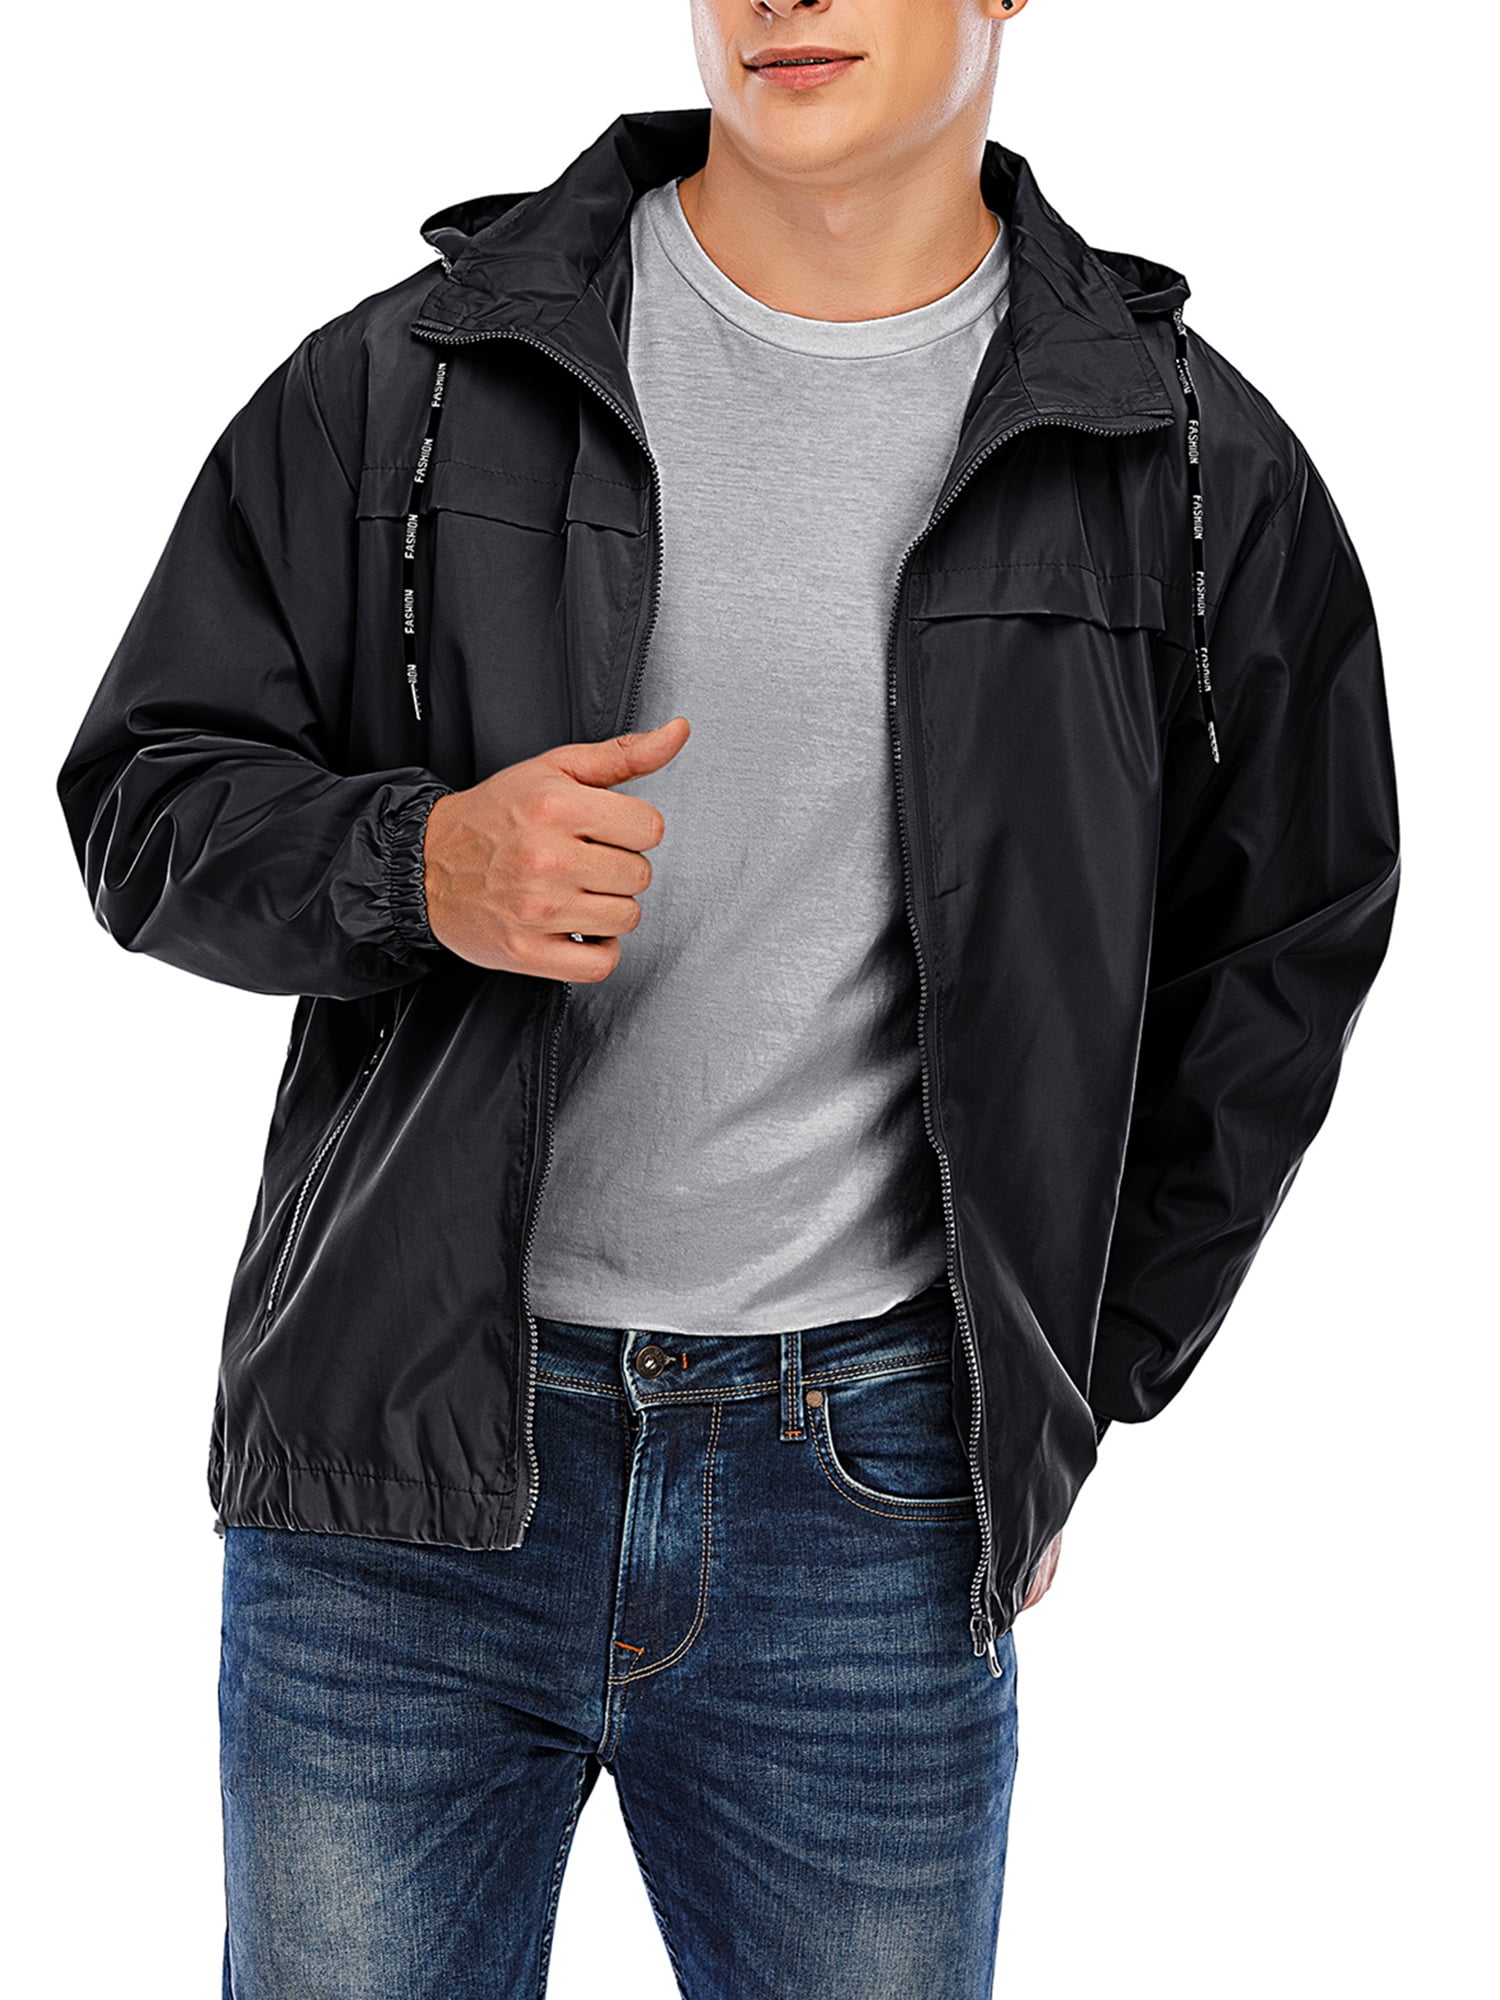 Youloveit Men Waterproof Jacket with Zip up Hooded Lightweight ...